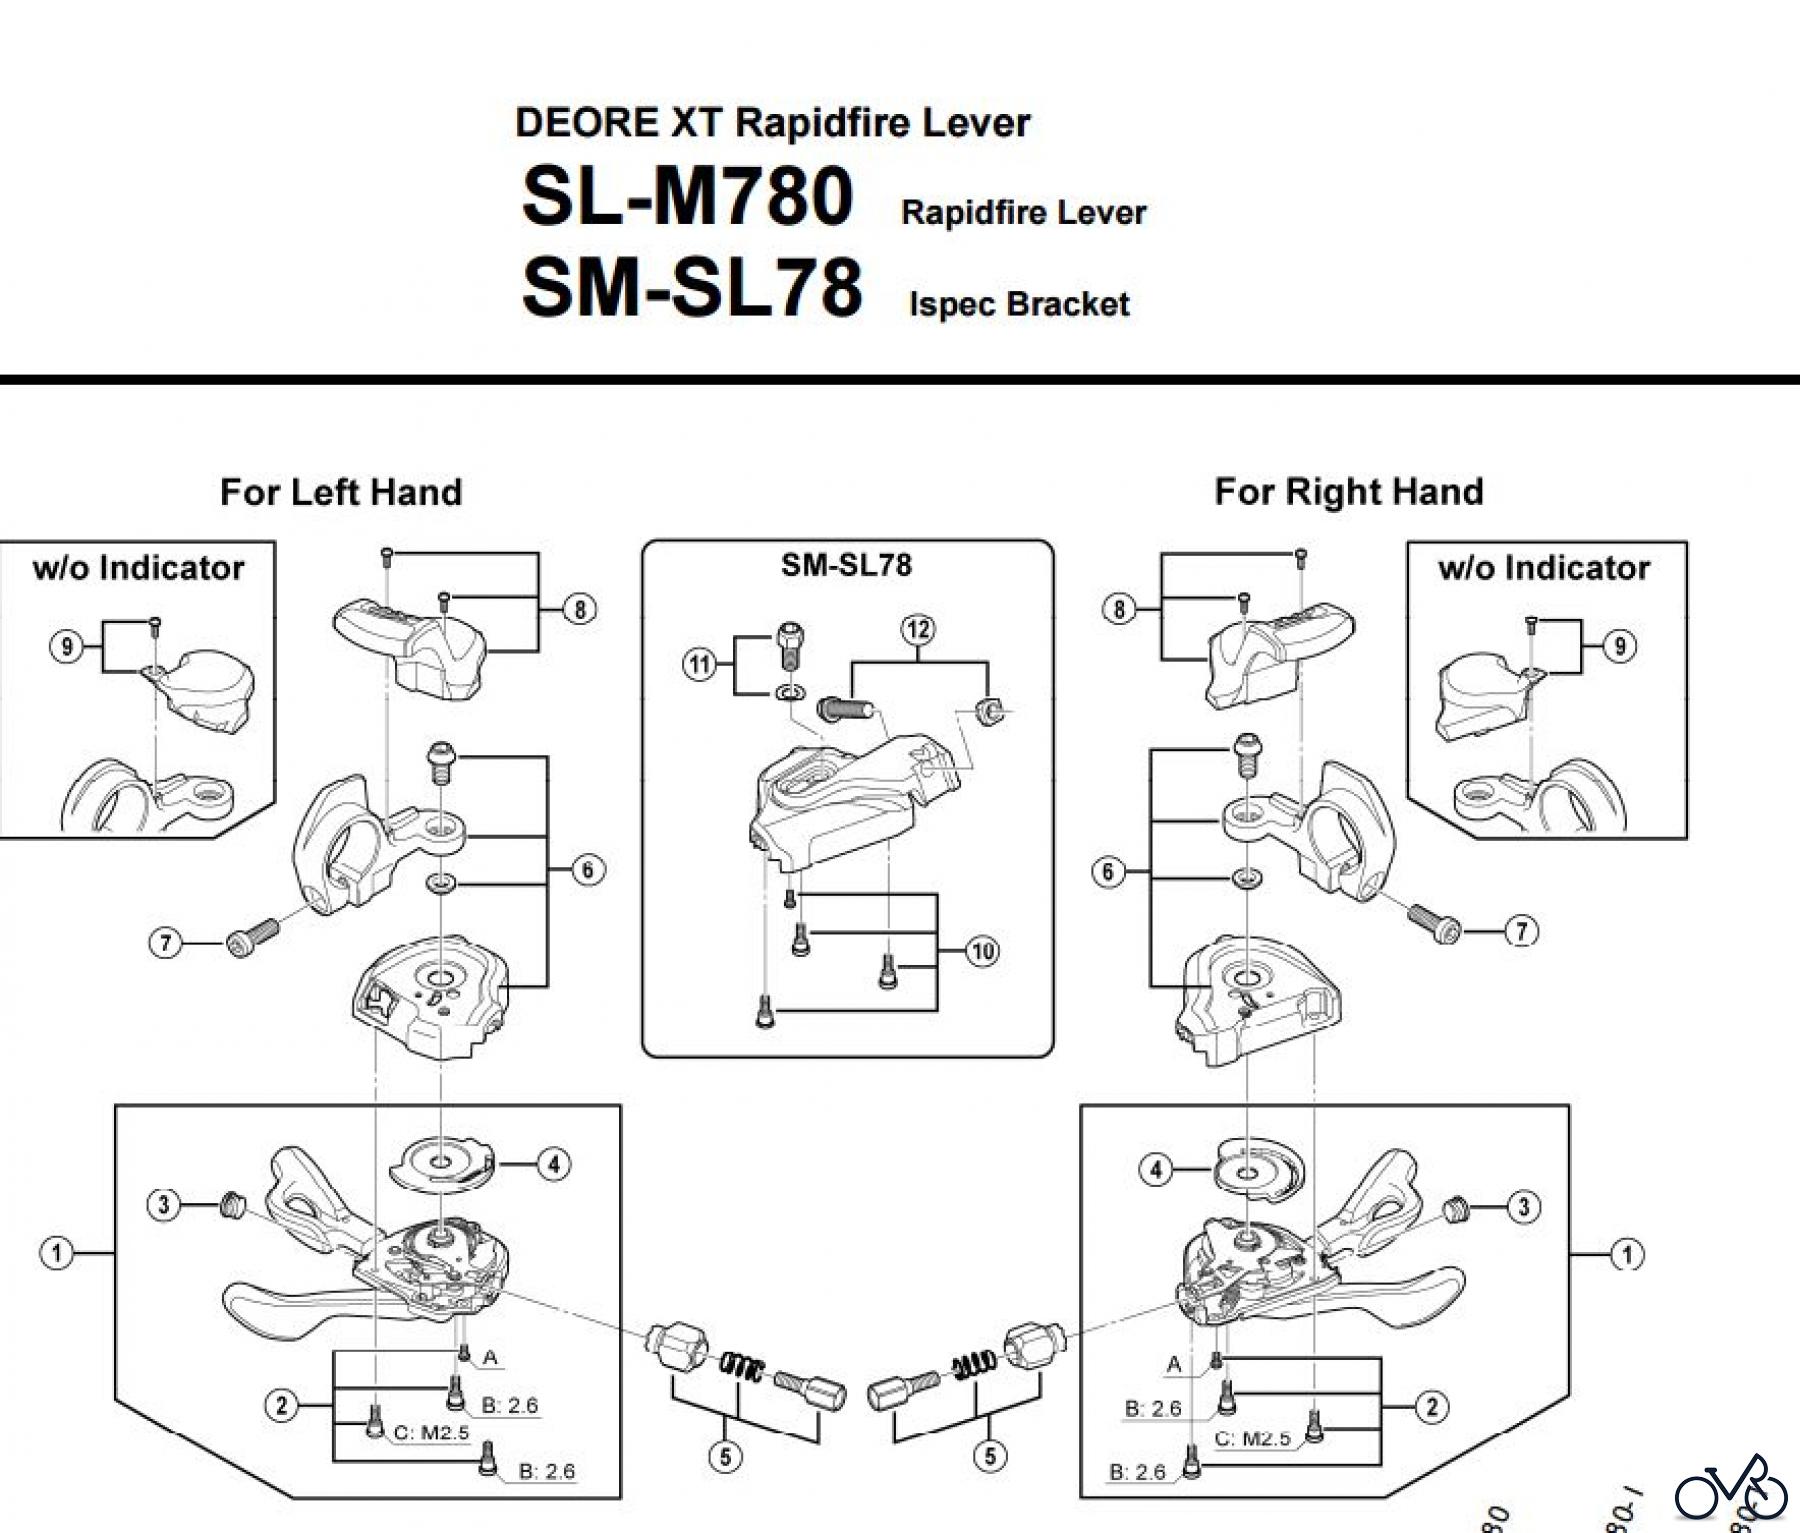  Shimano SL Shift Lever - Schalthebel SL-M780-3183 DEORE XT Rapidfire Lever